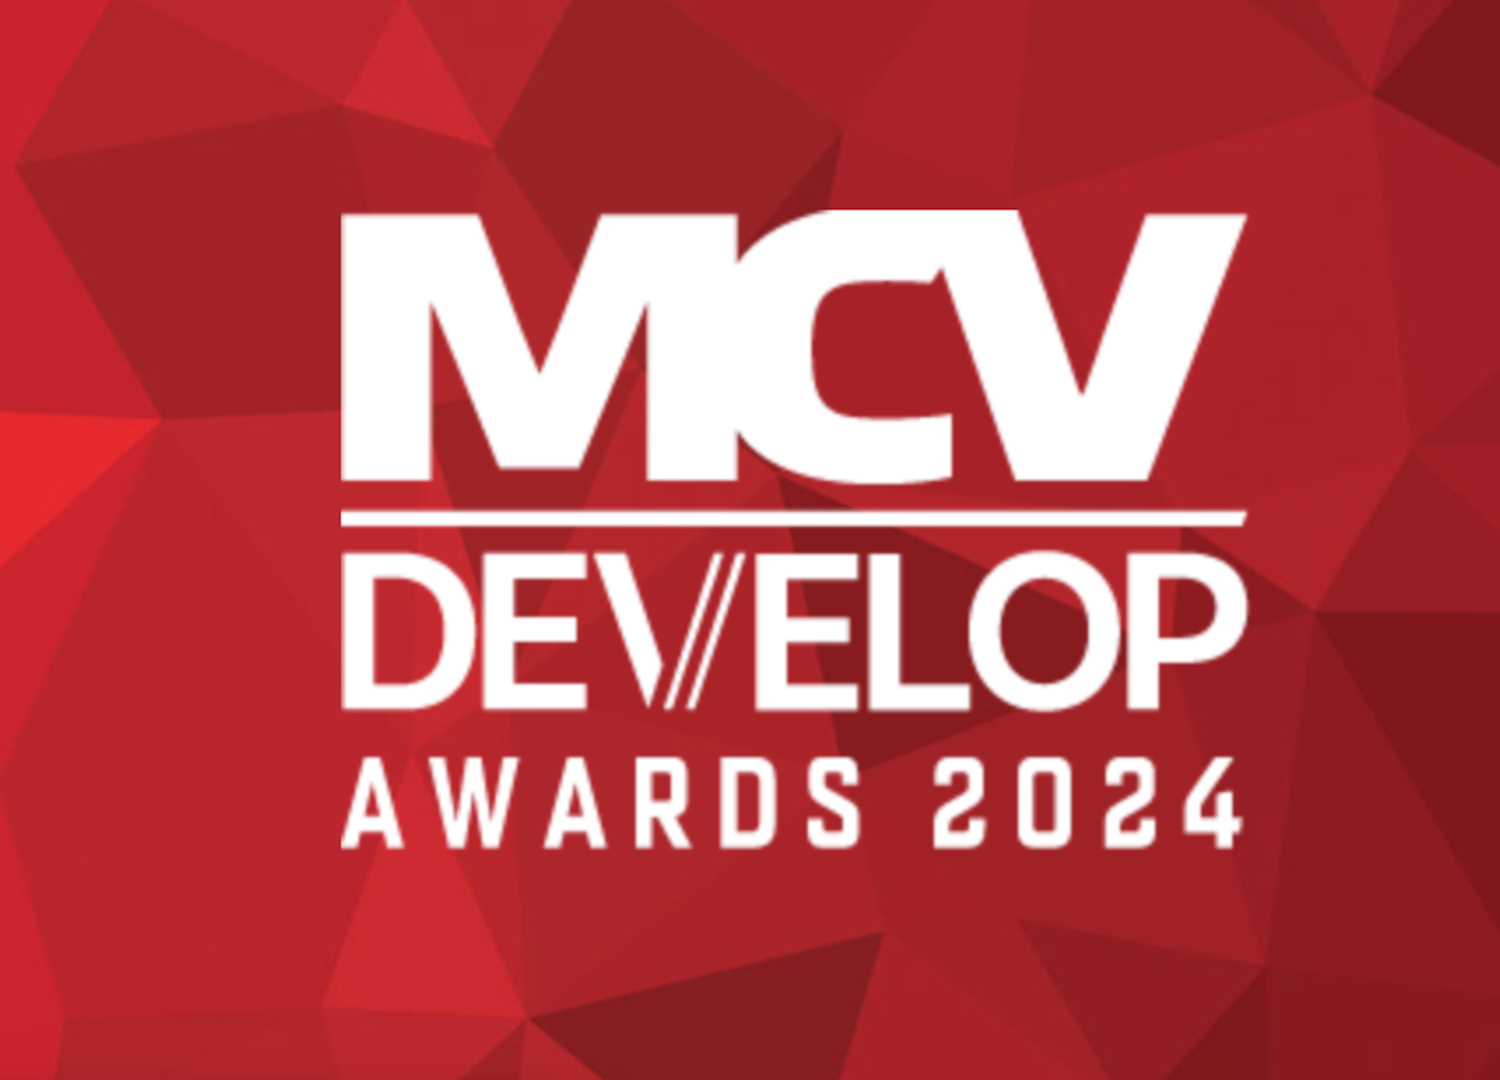 Sumo Digital receives six nominations at MCV/DEVELOP Awards 2024